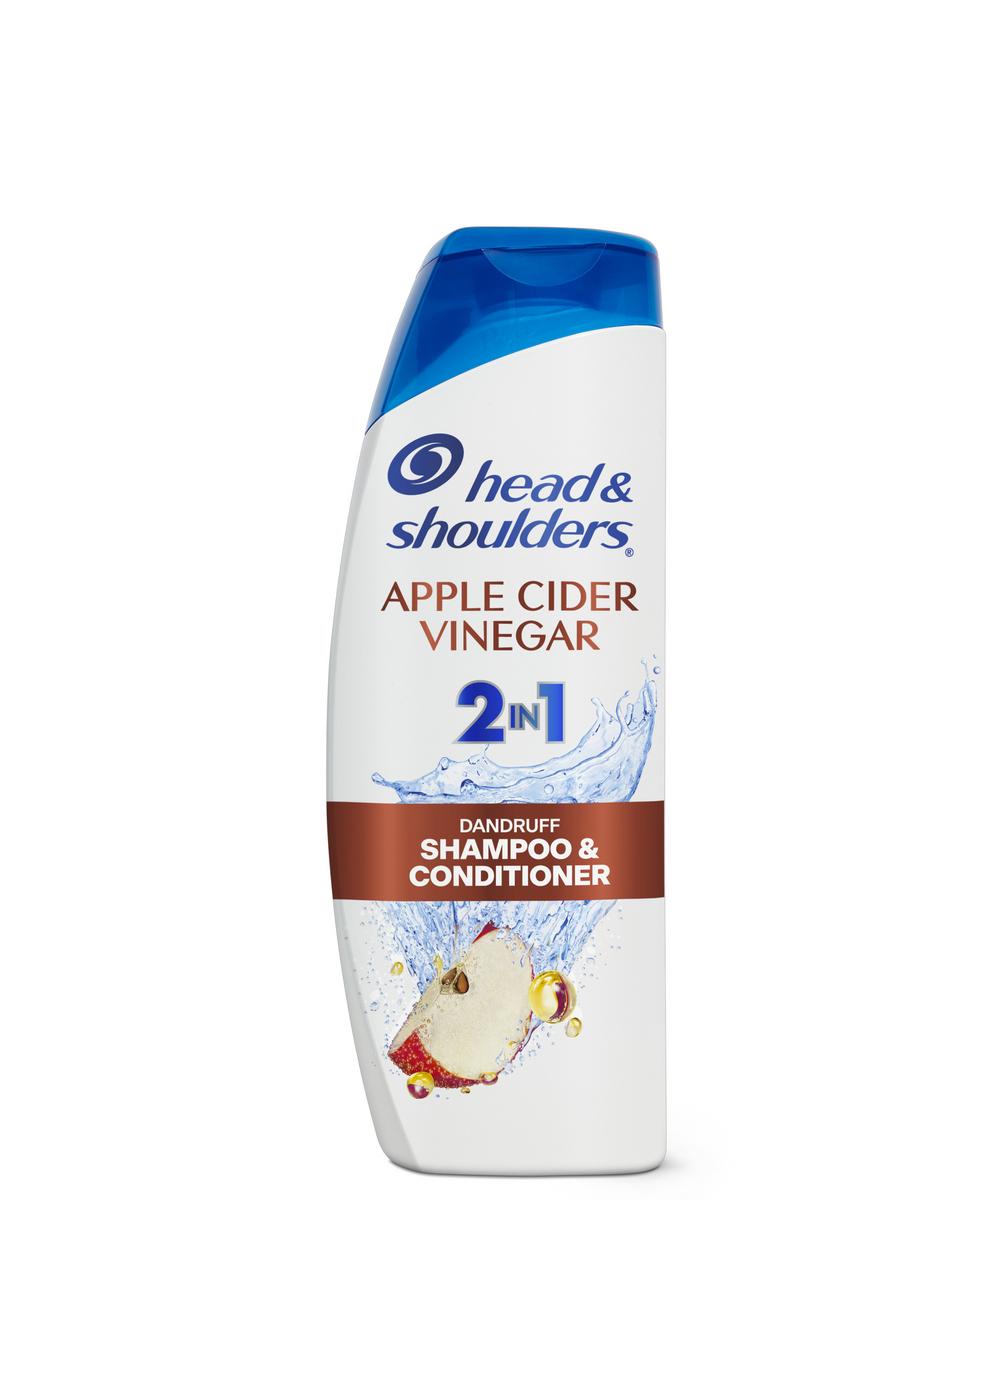 Head & Shoulders 2 in 1 Dandruff Shampoo + Conditioner - Apple Cider Vinegar; image 2 of 11